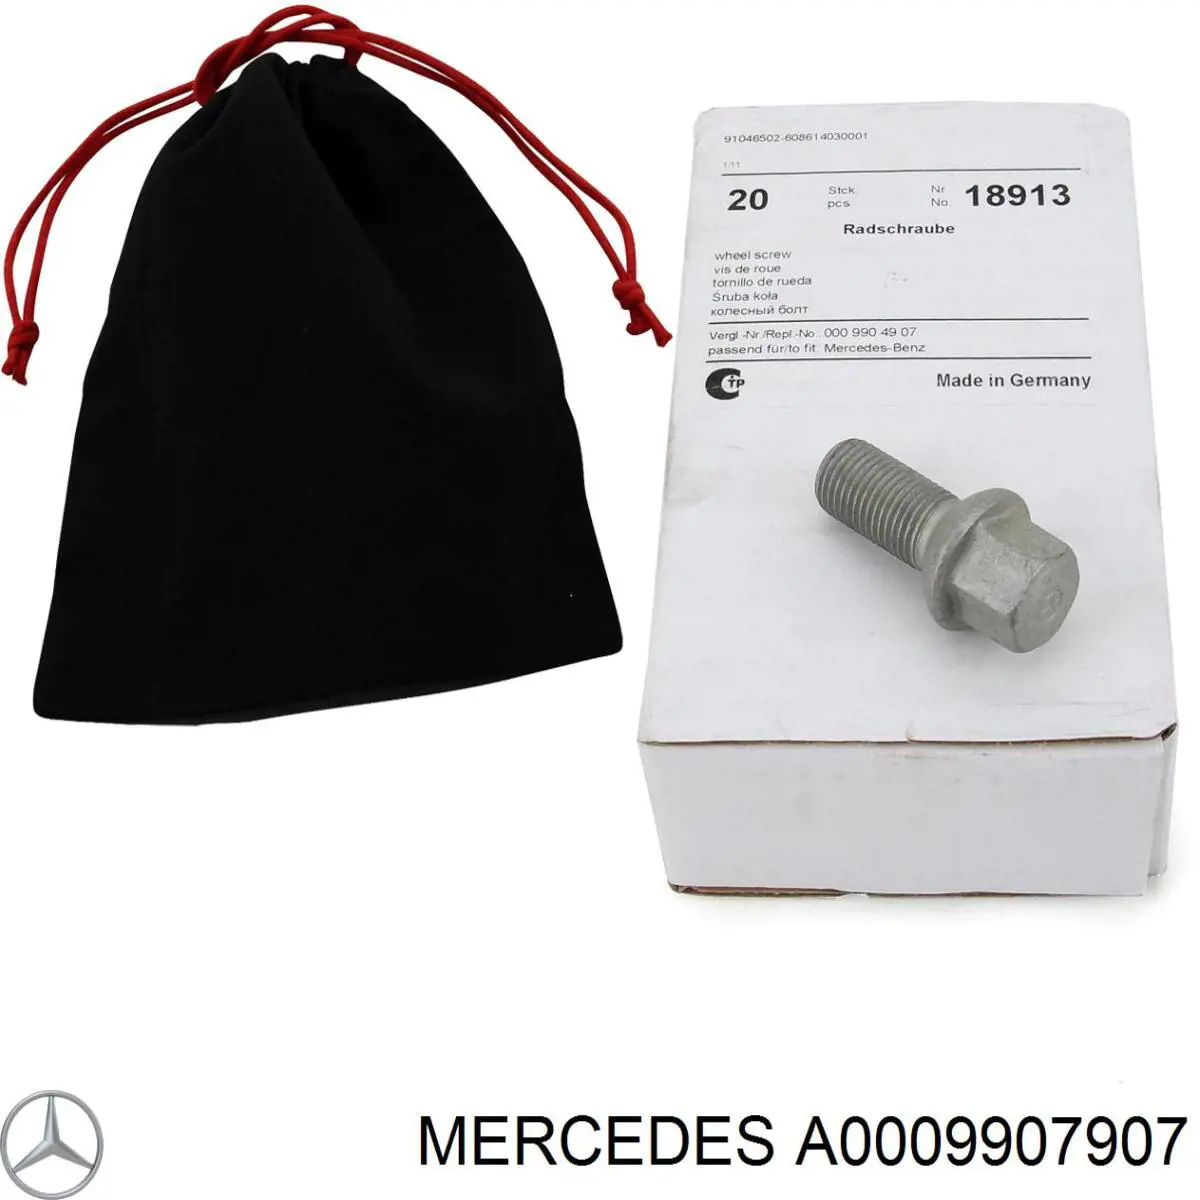 0009907907 Mercedes 